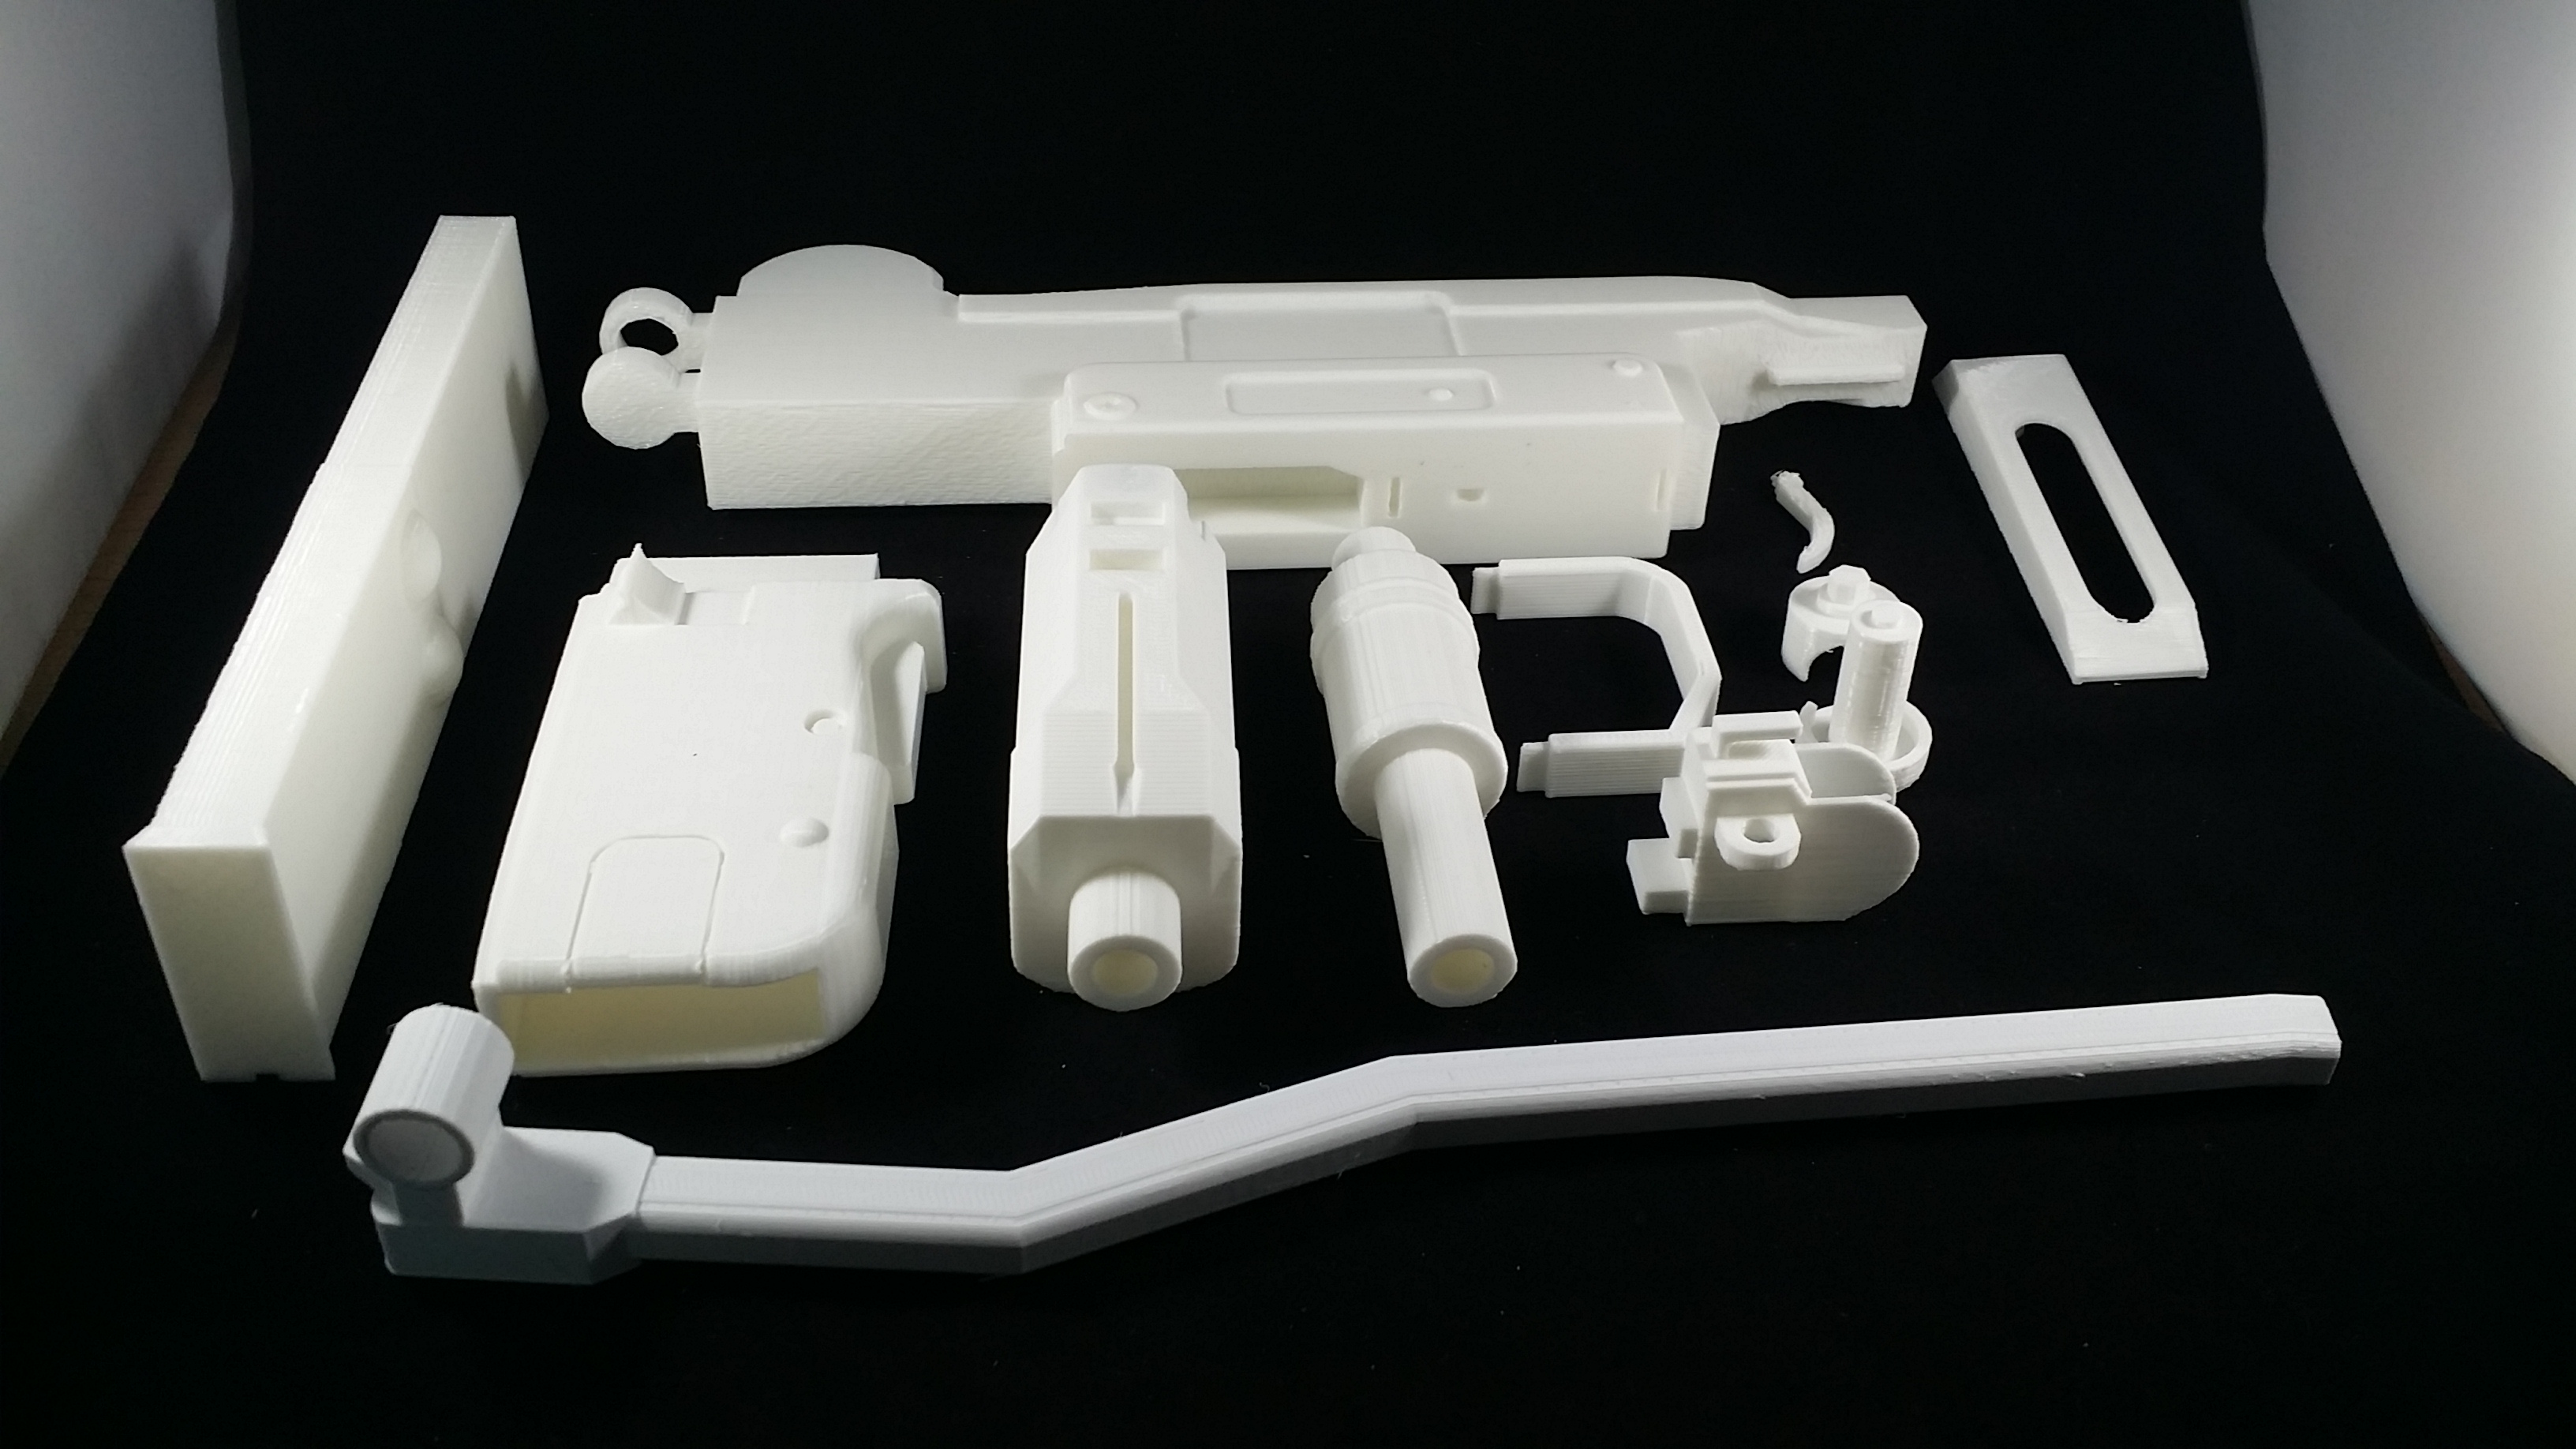 Toy gun - mini UZI 9mm submachine gun